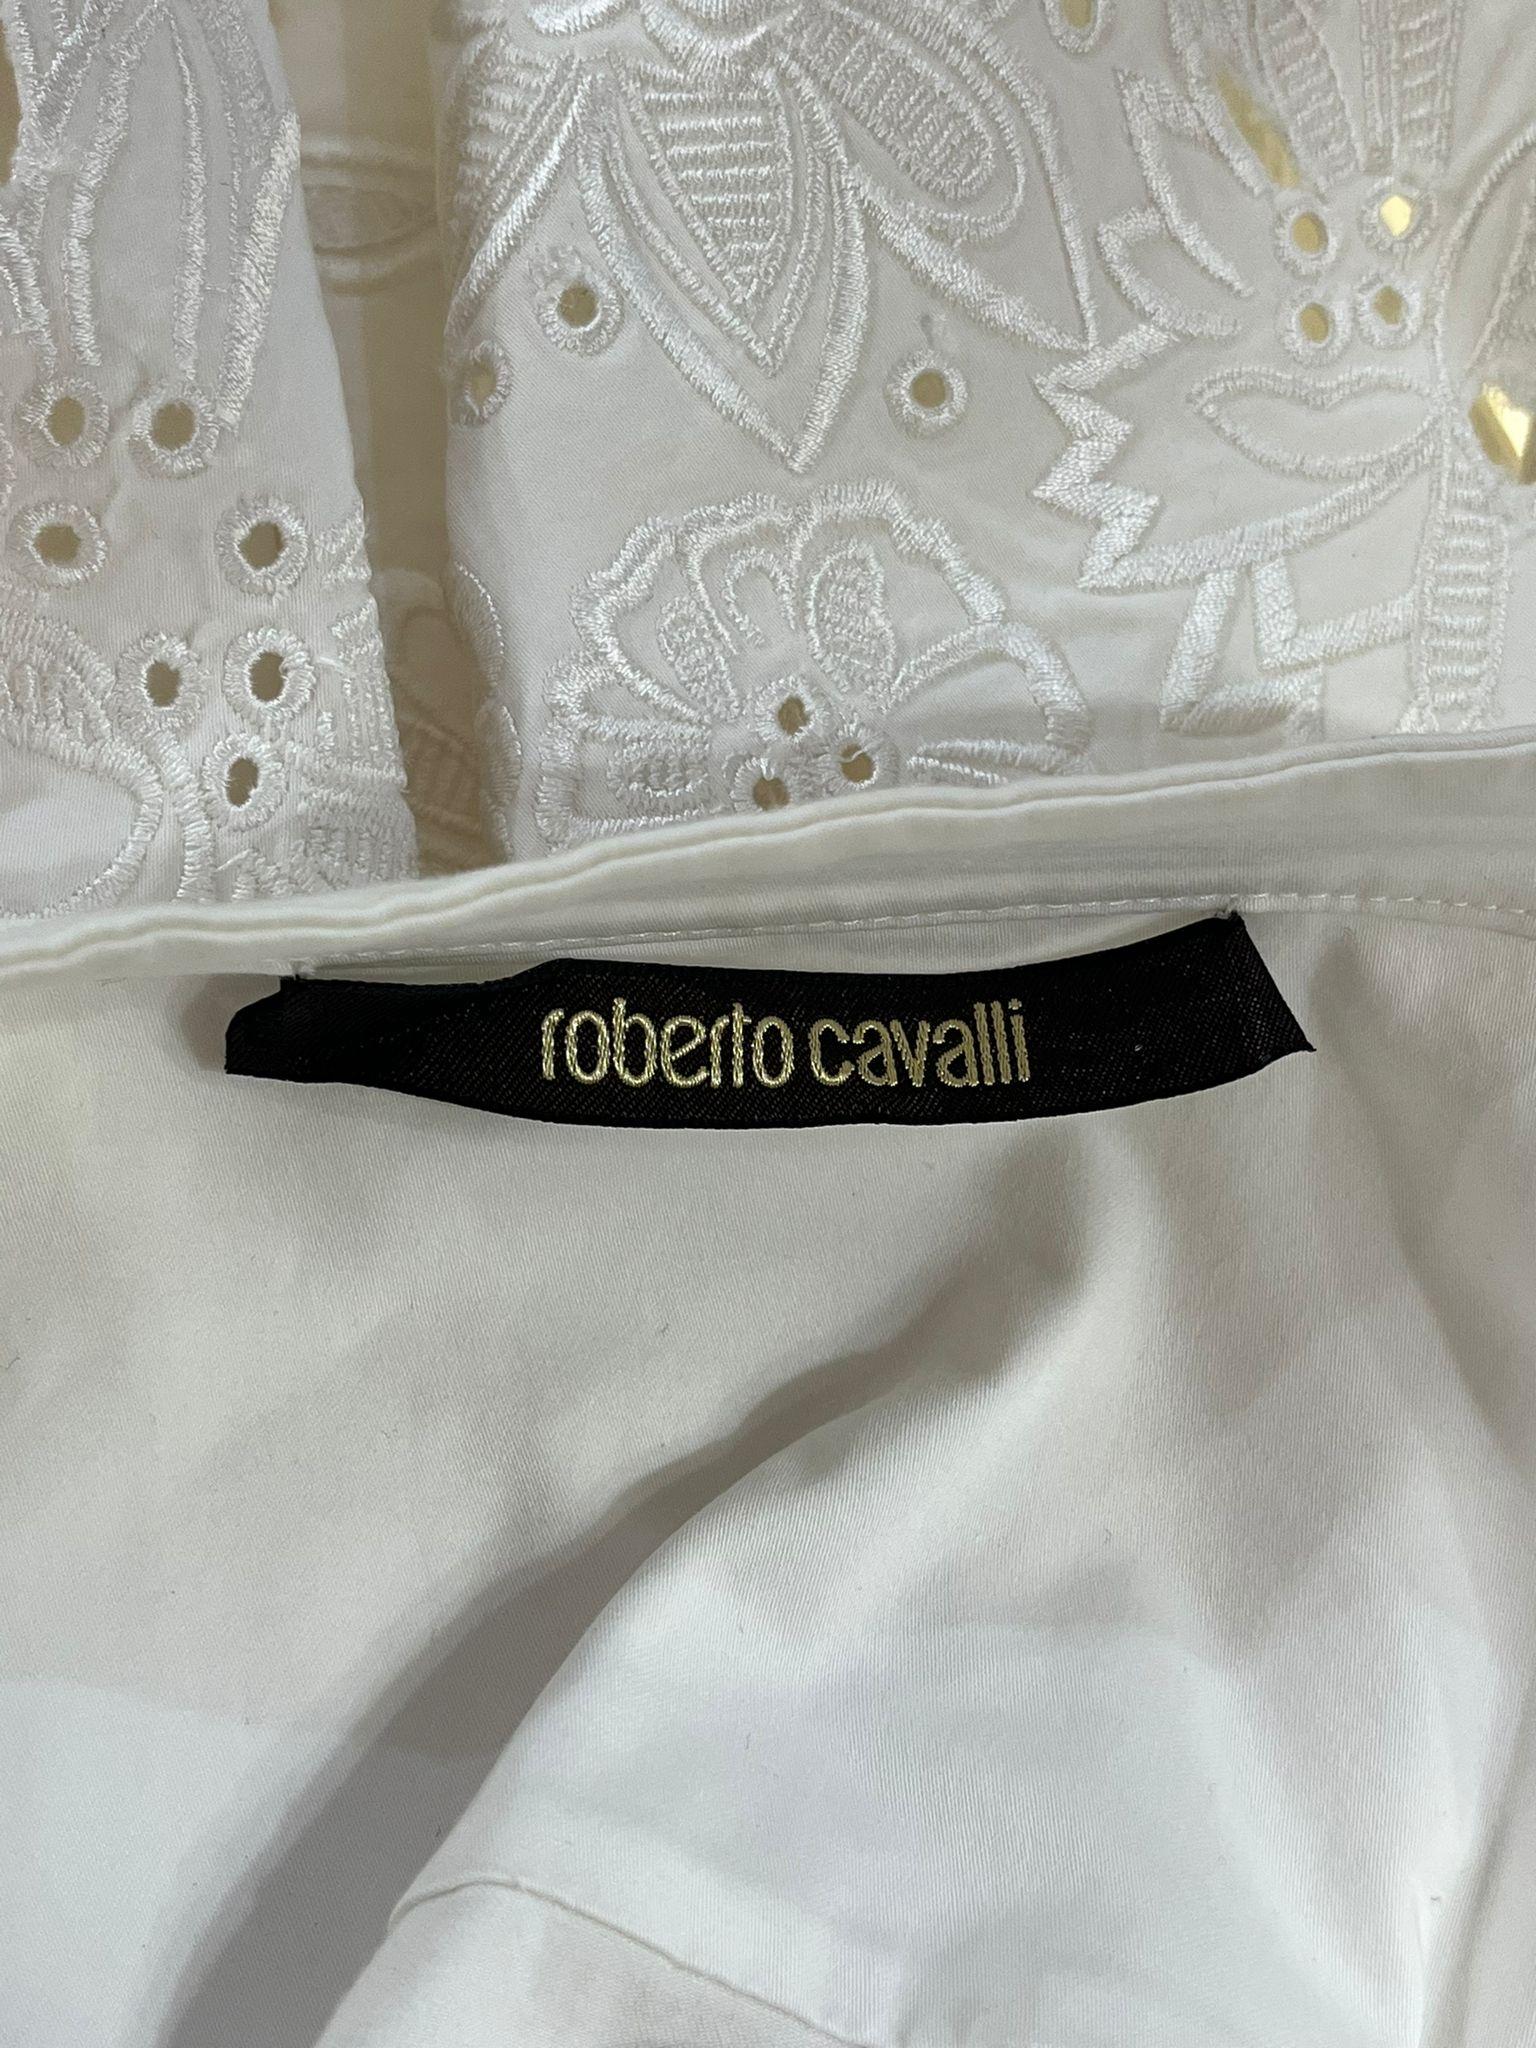 Roberto Cavalli Embroidered Cotton Dress For Sale 1